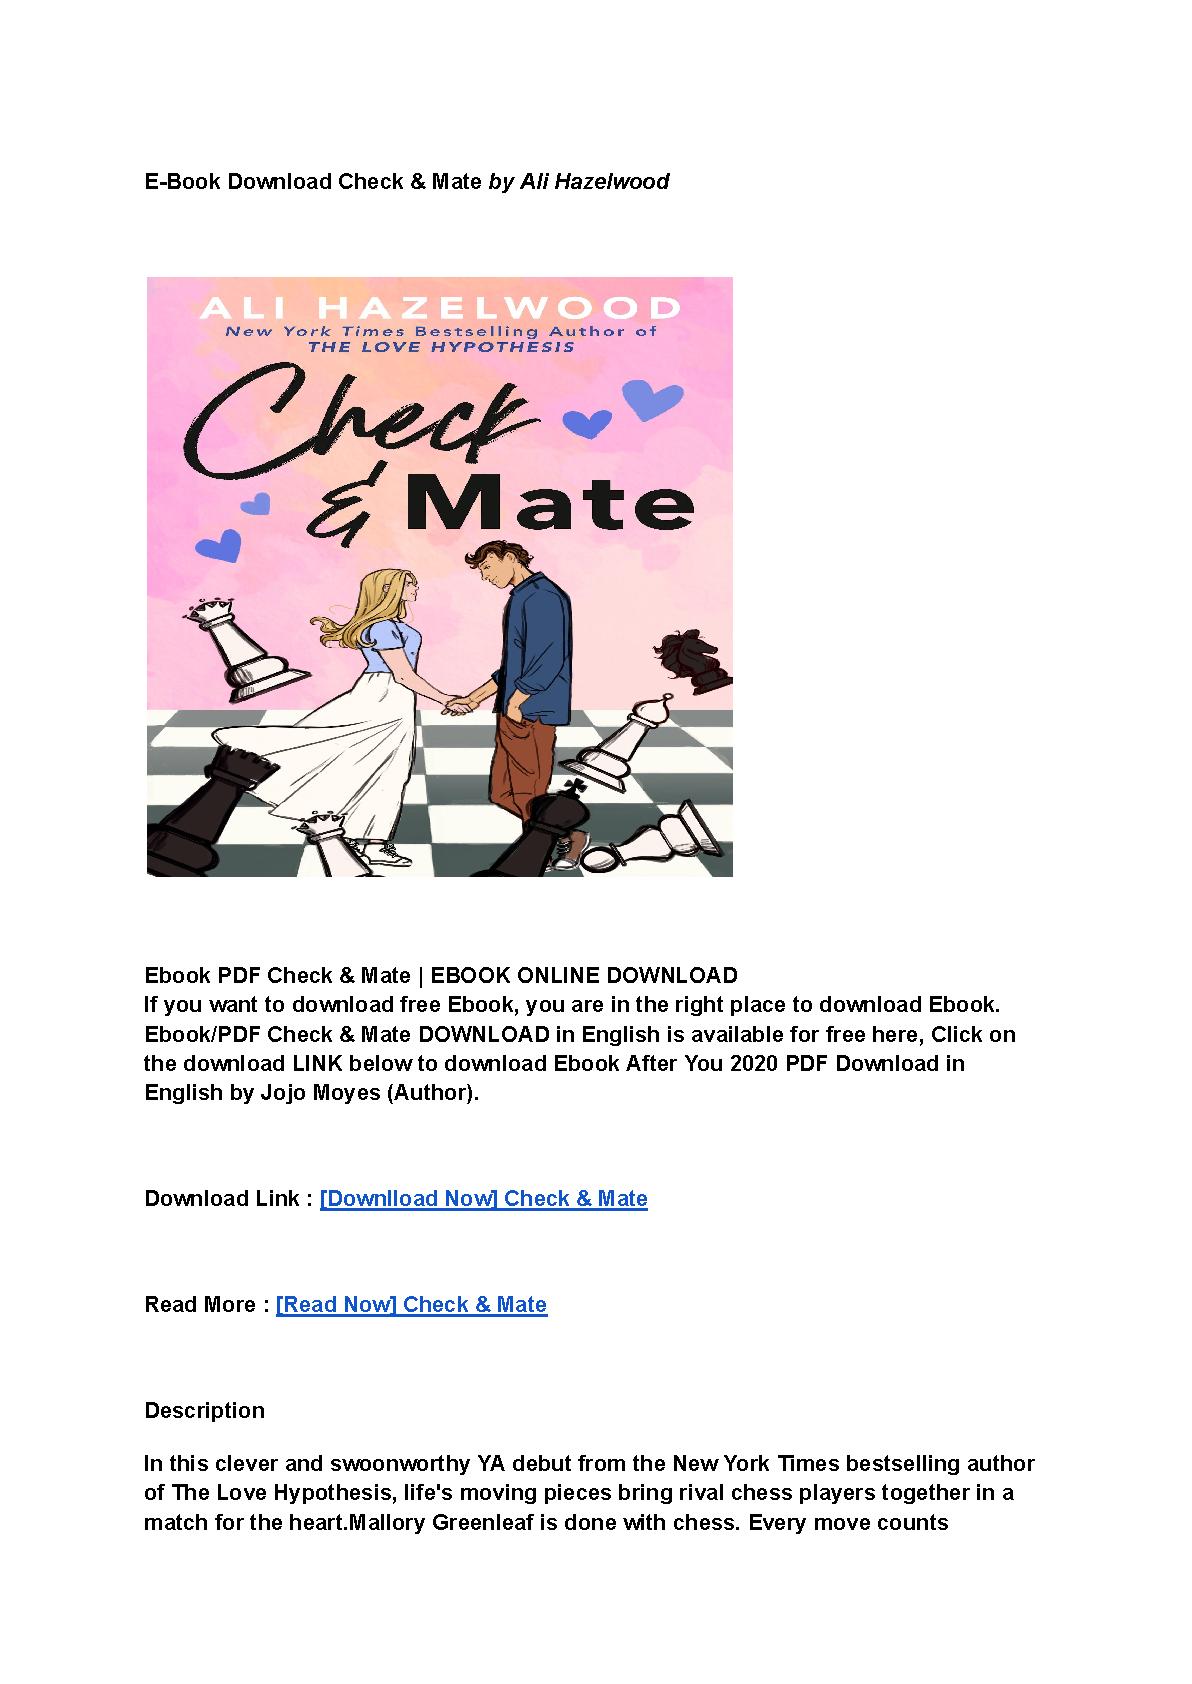 Download Now Check & Mate (Author Ali Hazelwood) by phoenixjoseph868 - Issuu